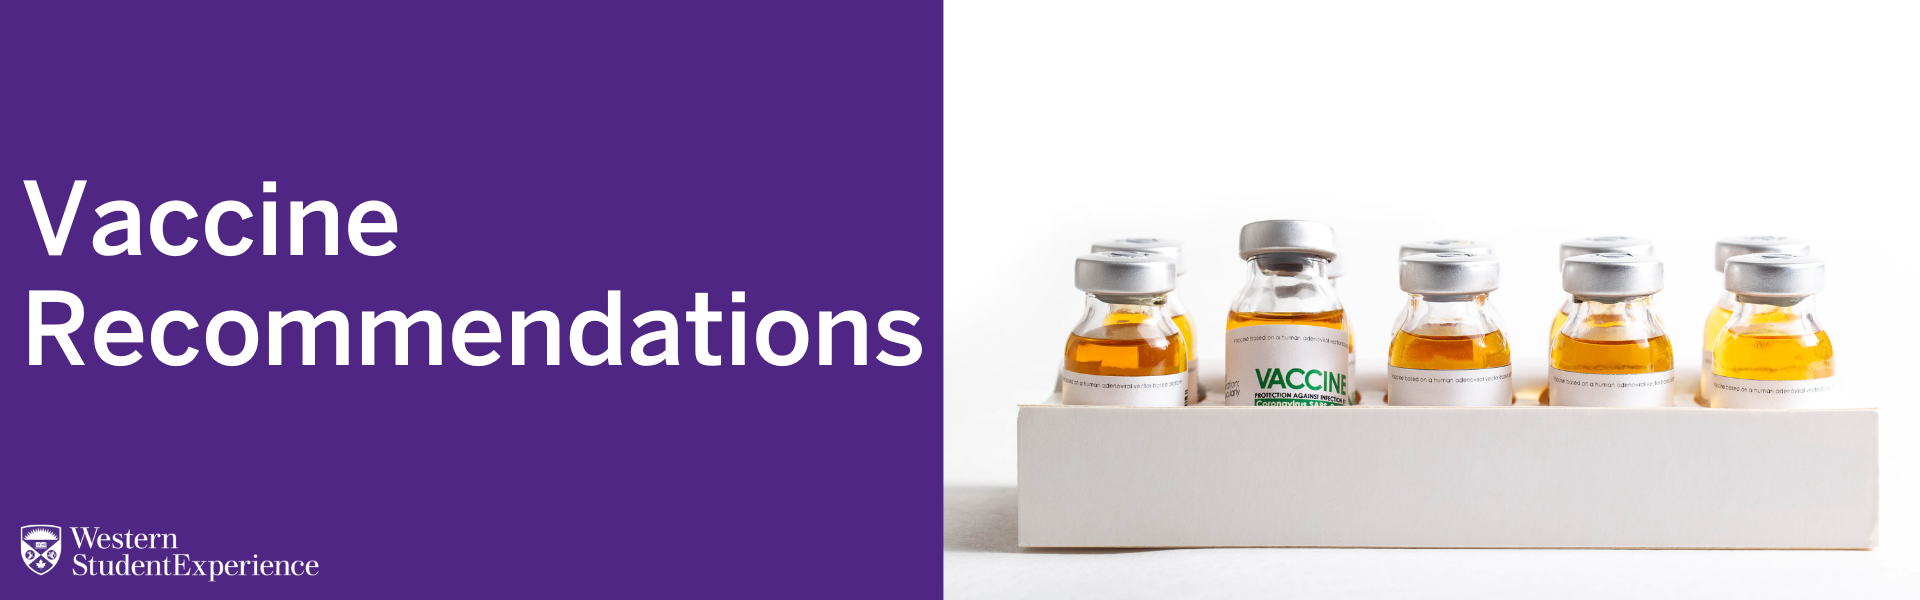 Image of vials representing vaccinations.